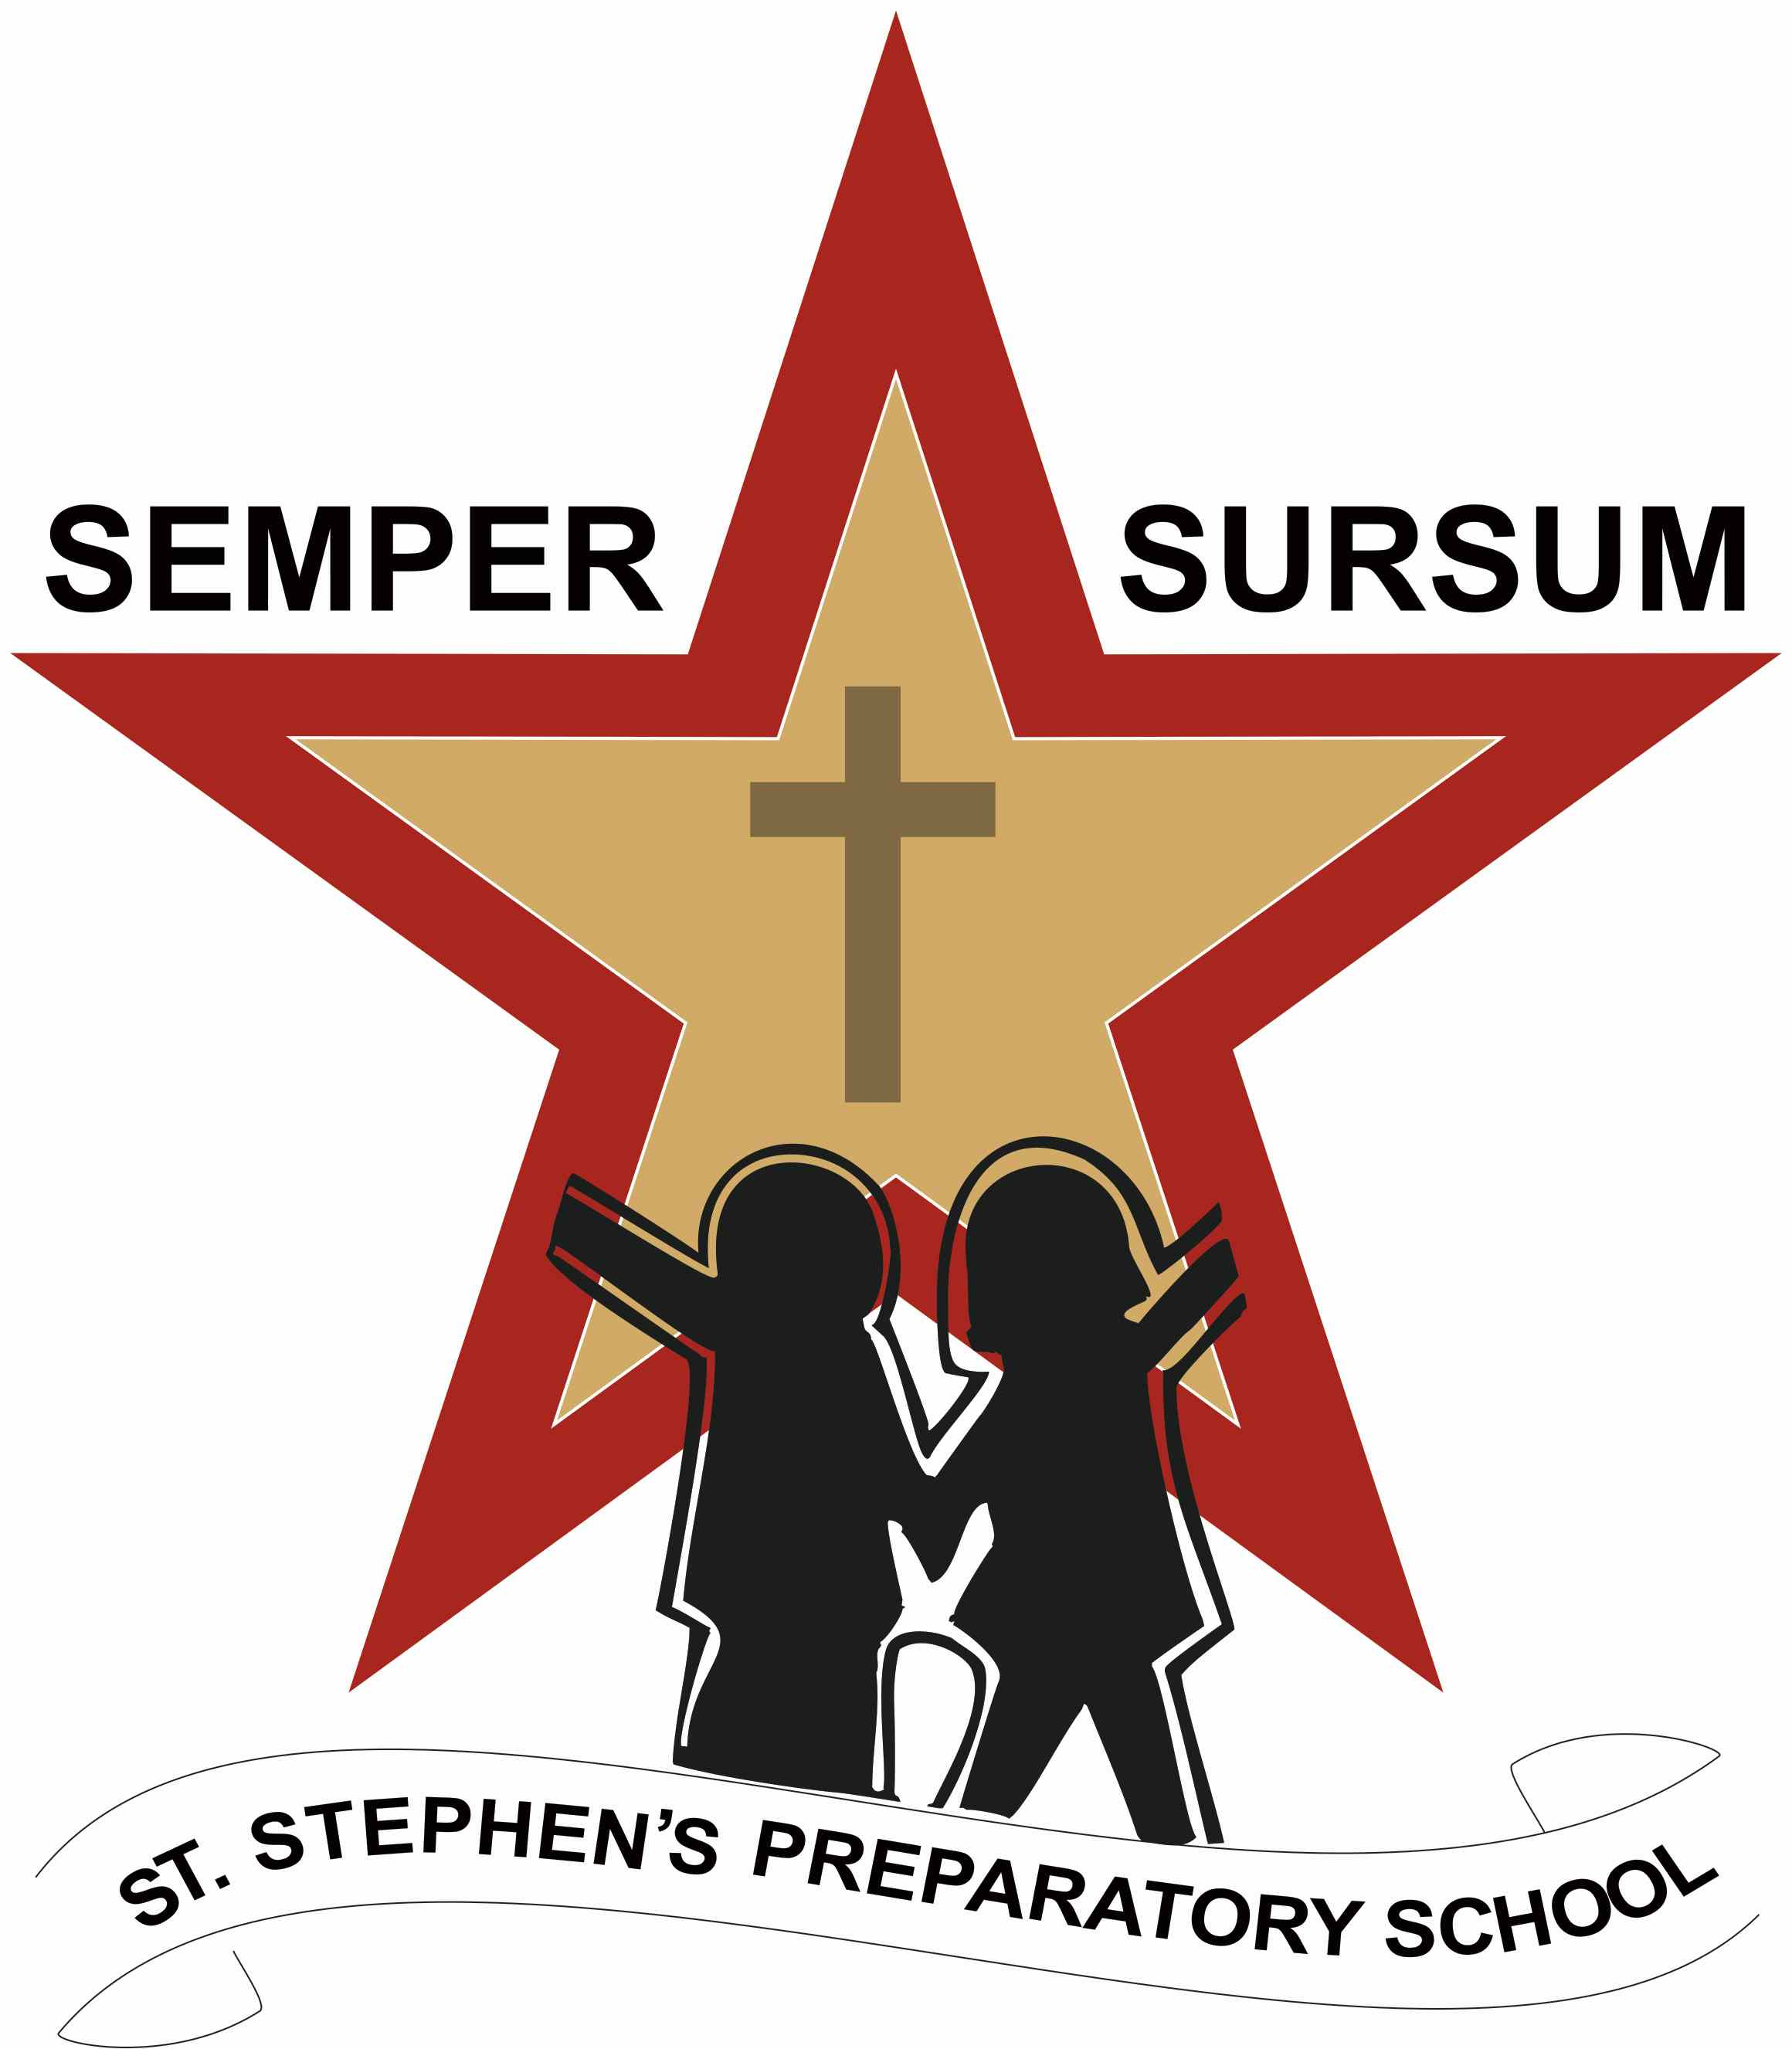 St. Stephen's Preparatory School|Schools|Education